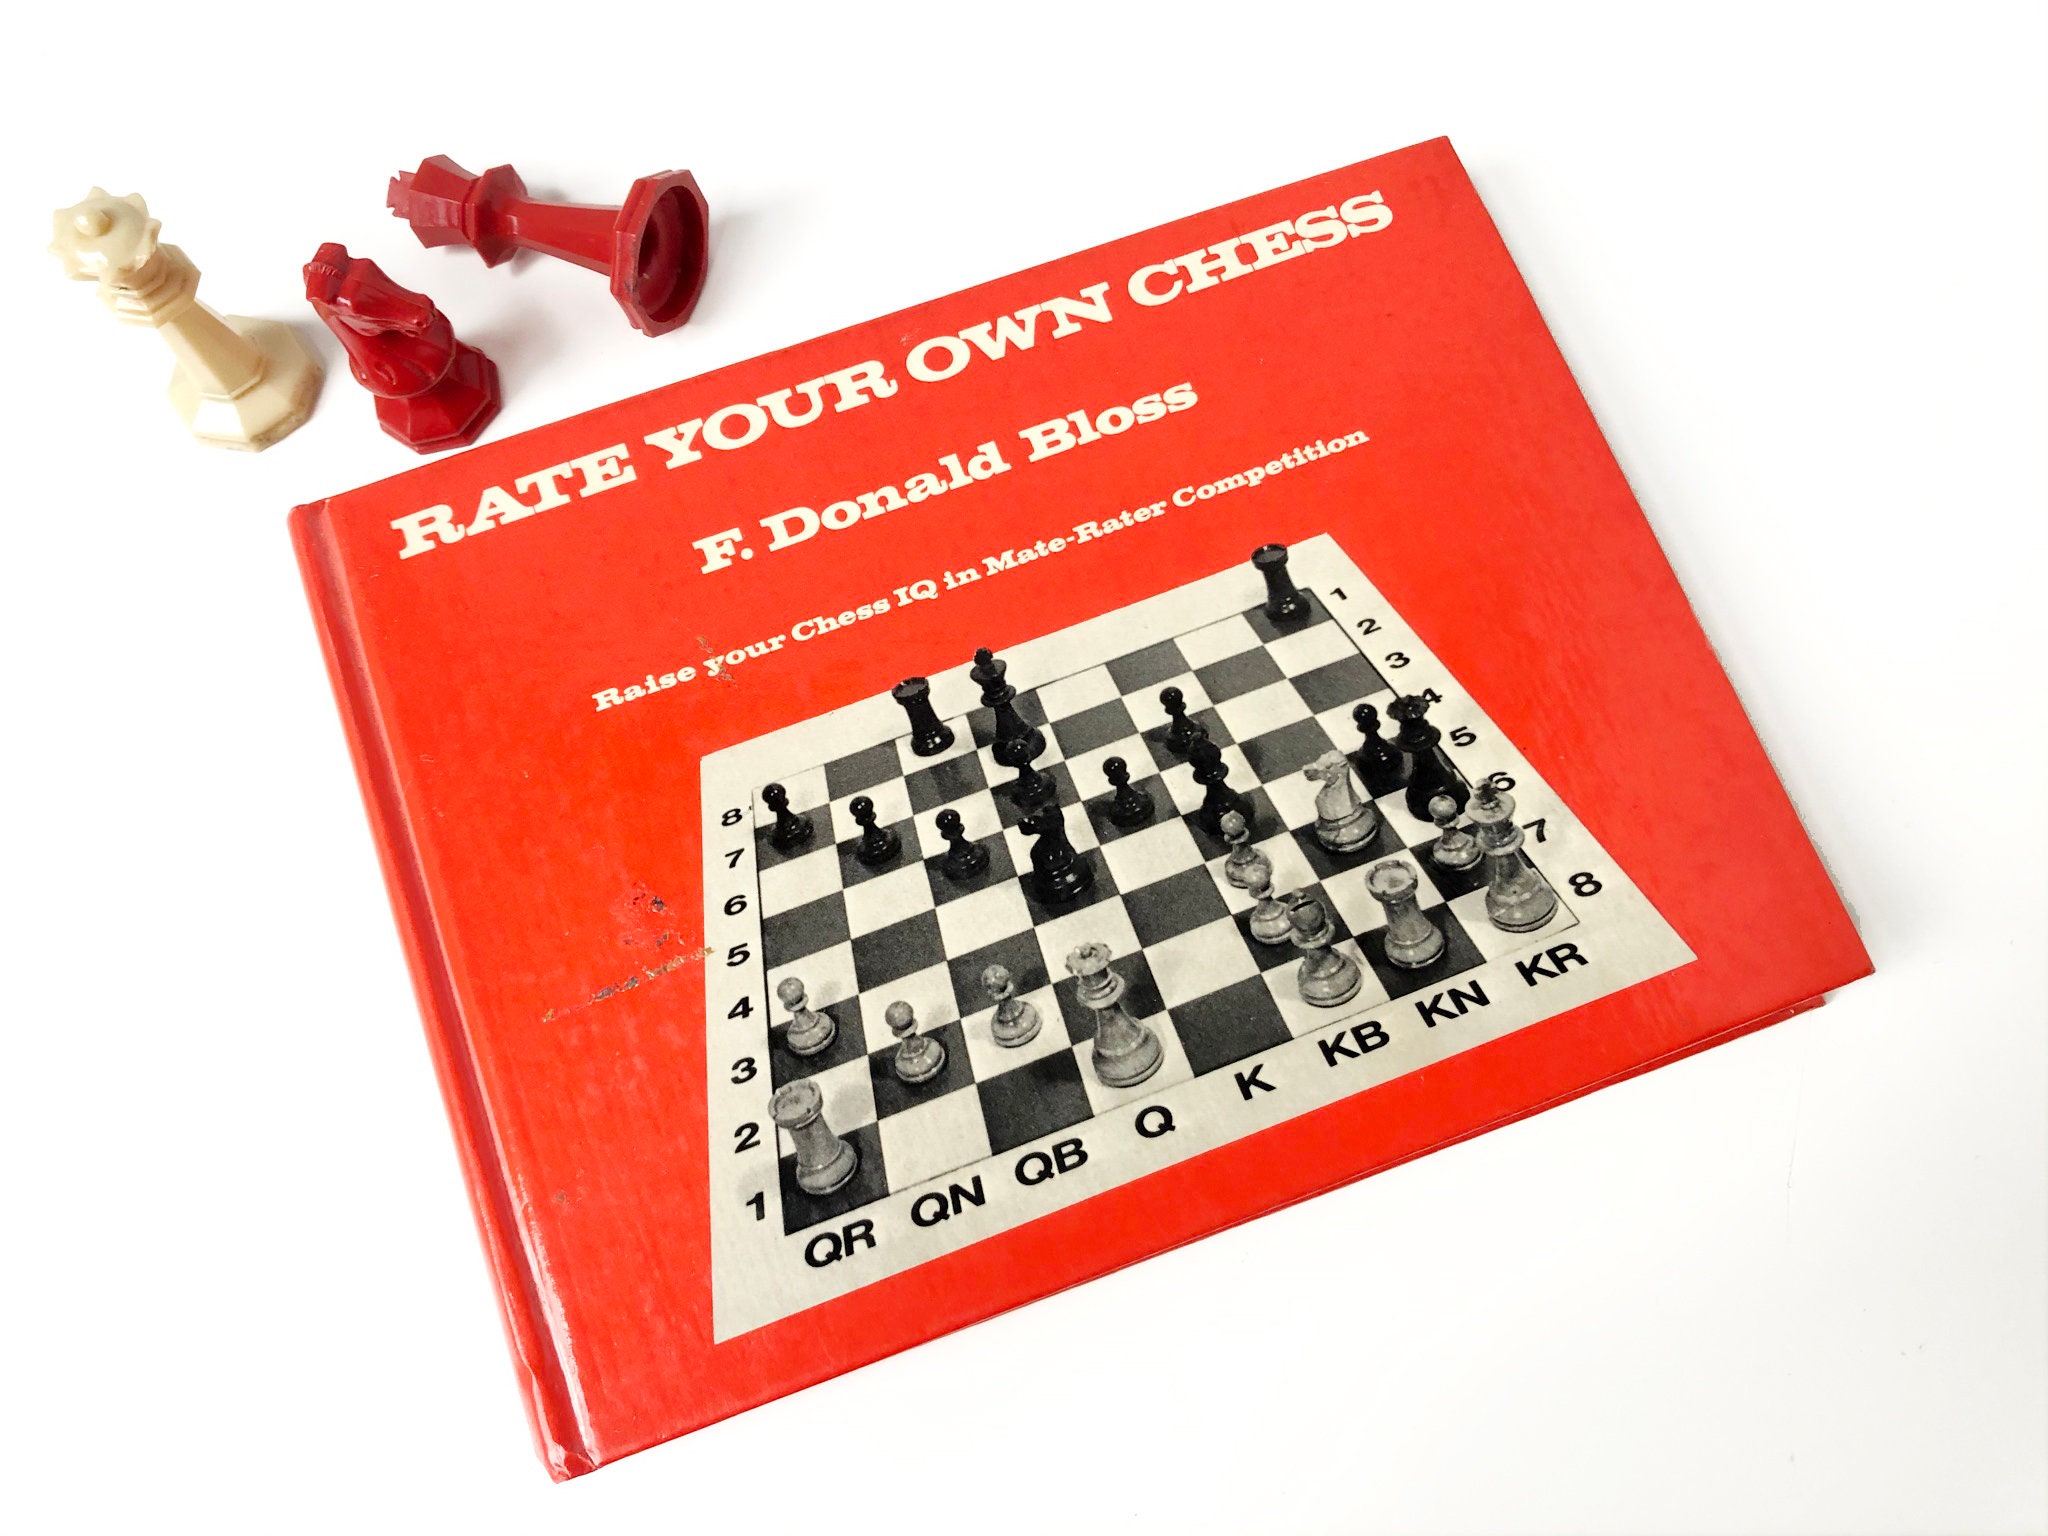 Soviet Chess Books Paul Keres Theory of chess openings - Inspire